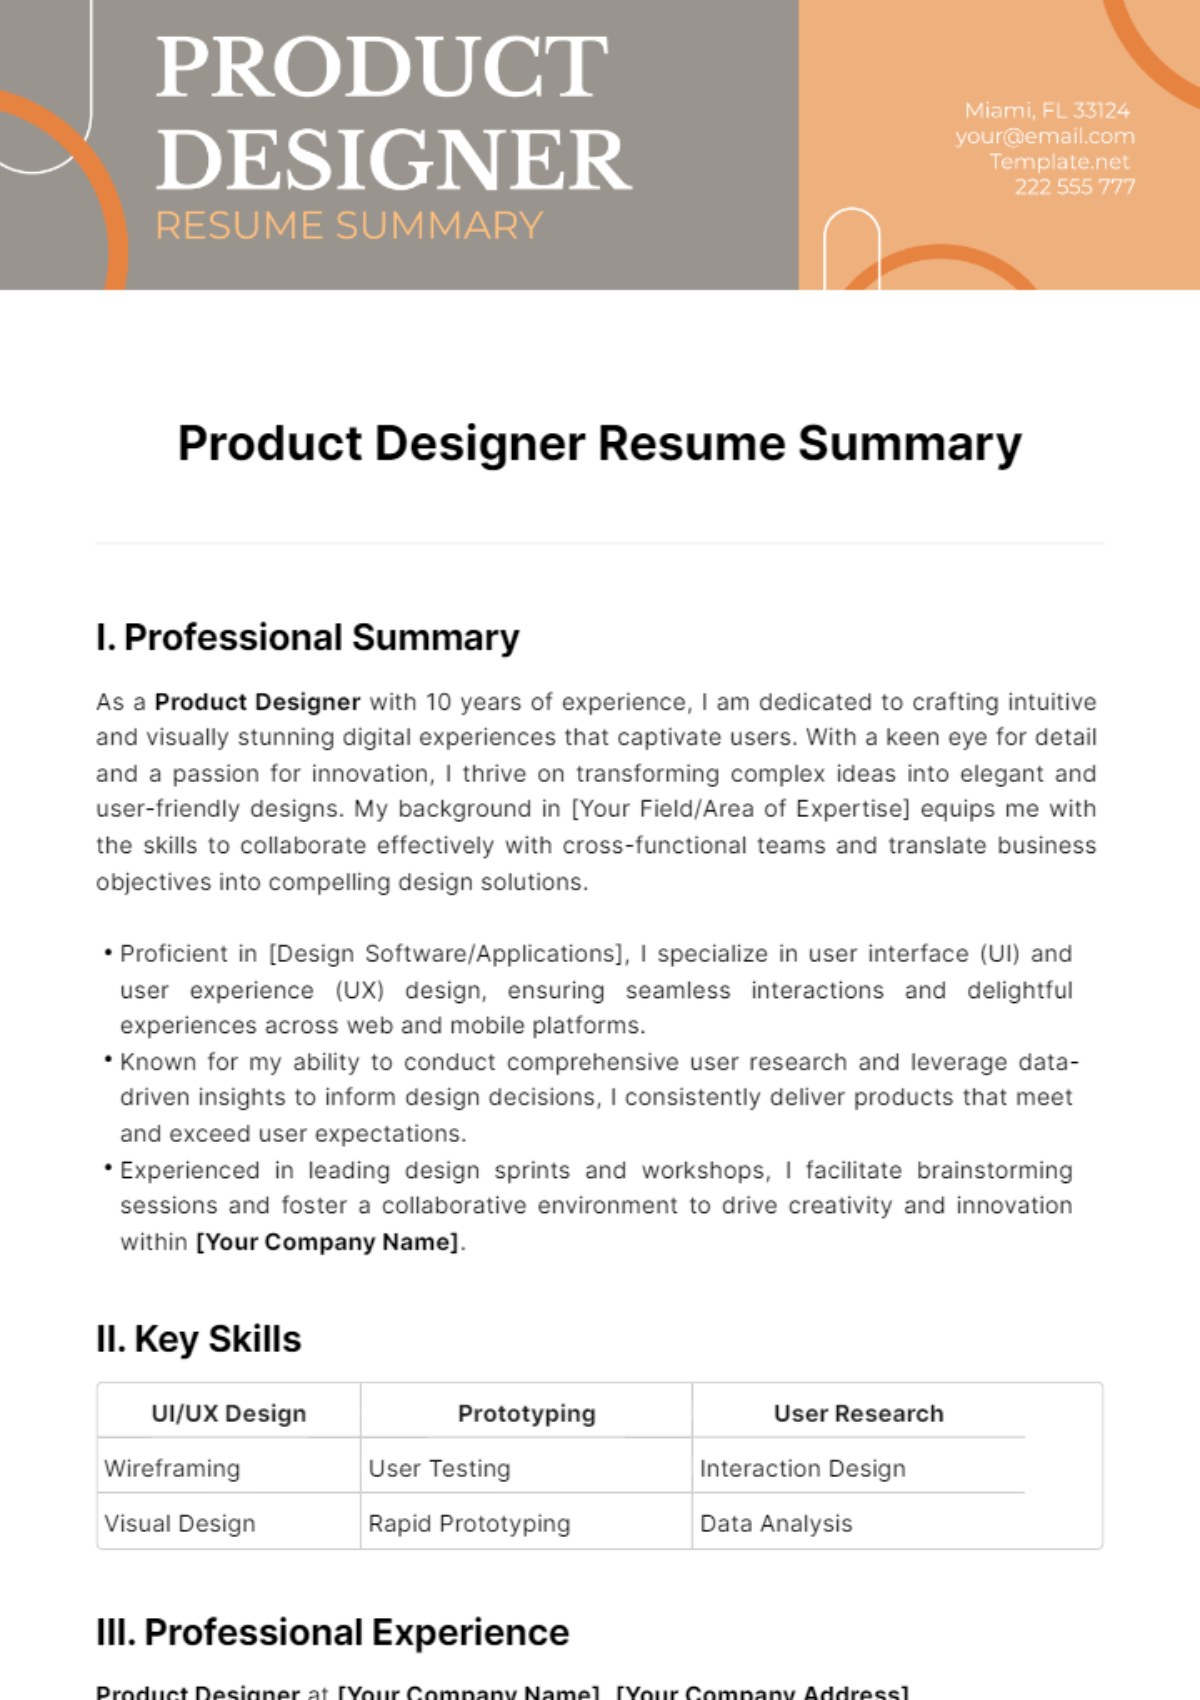 Product Designer Resume Summary Template